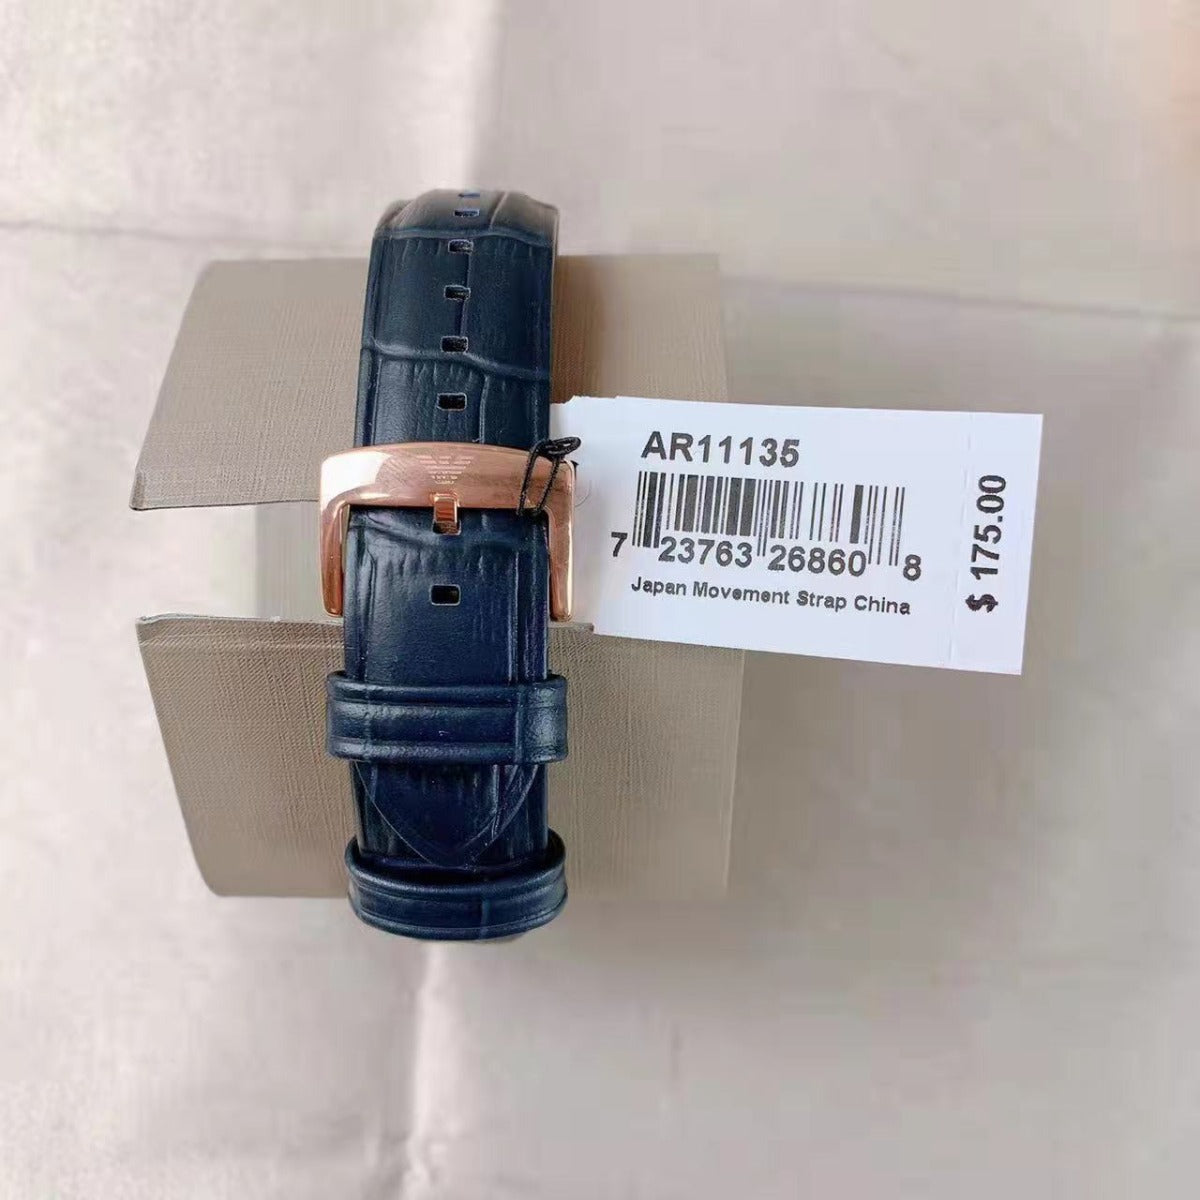 Emporio Armani AR11135 Three-Hand Date Blue Leather Watch